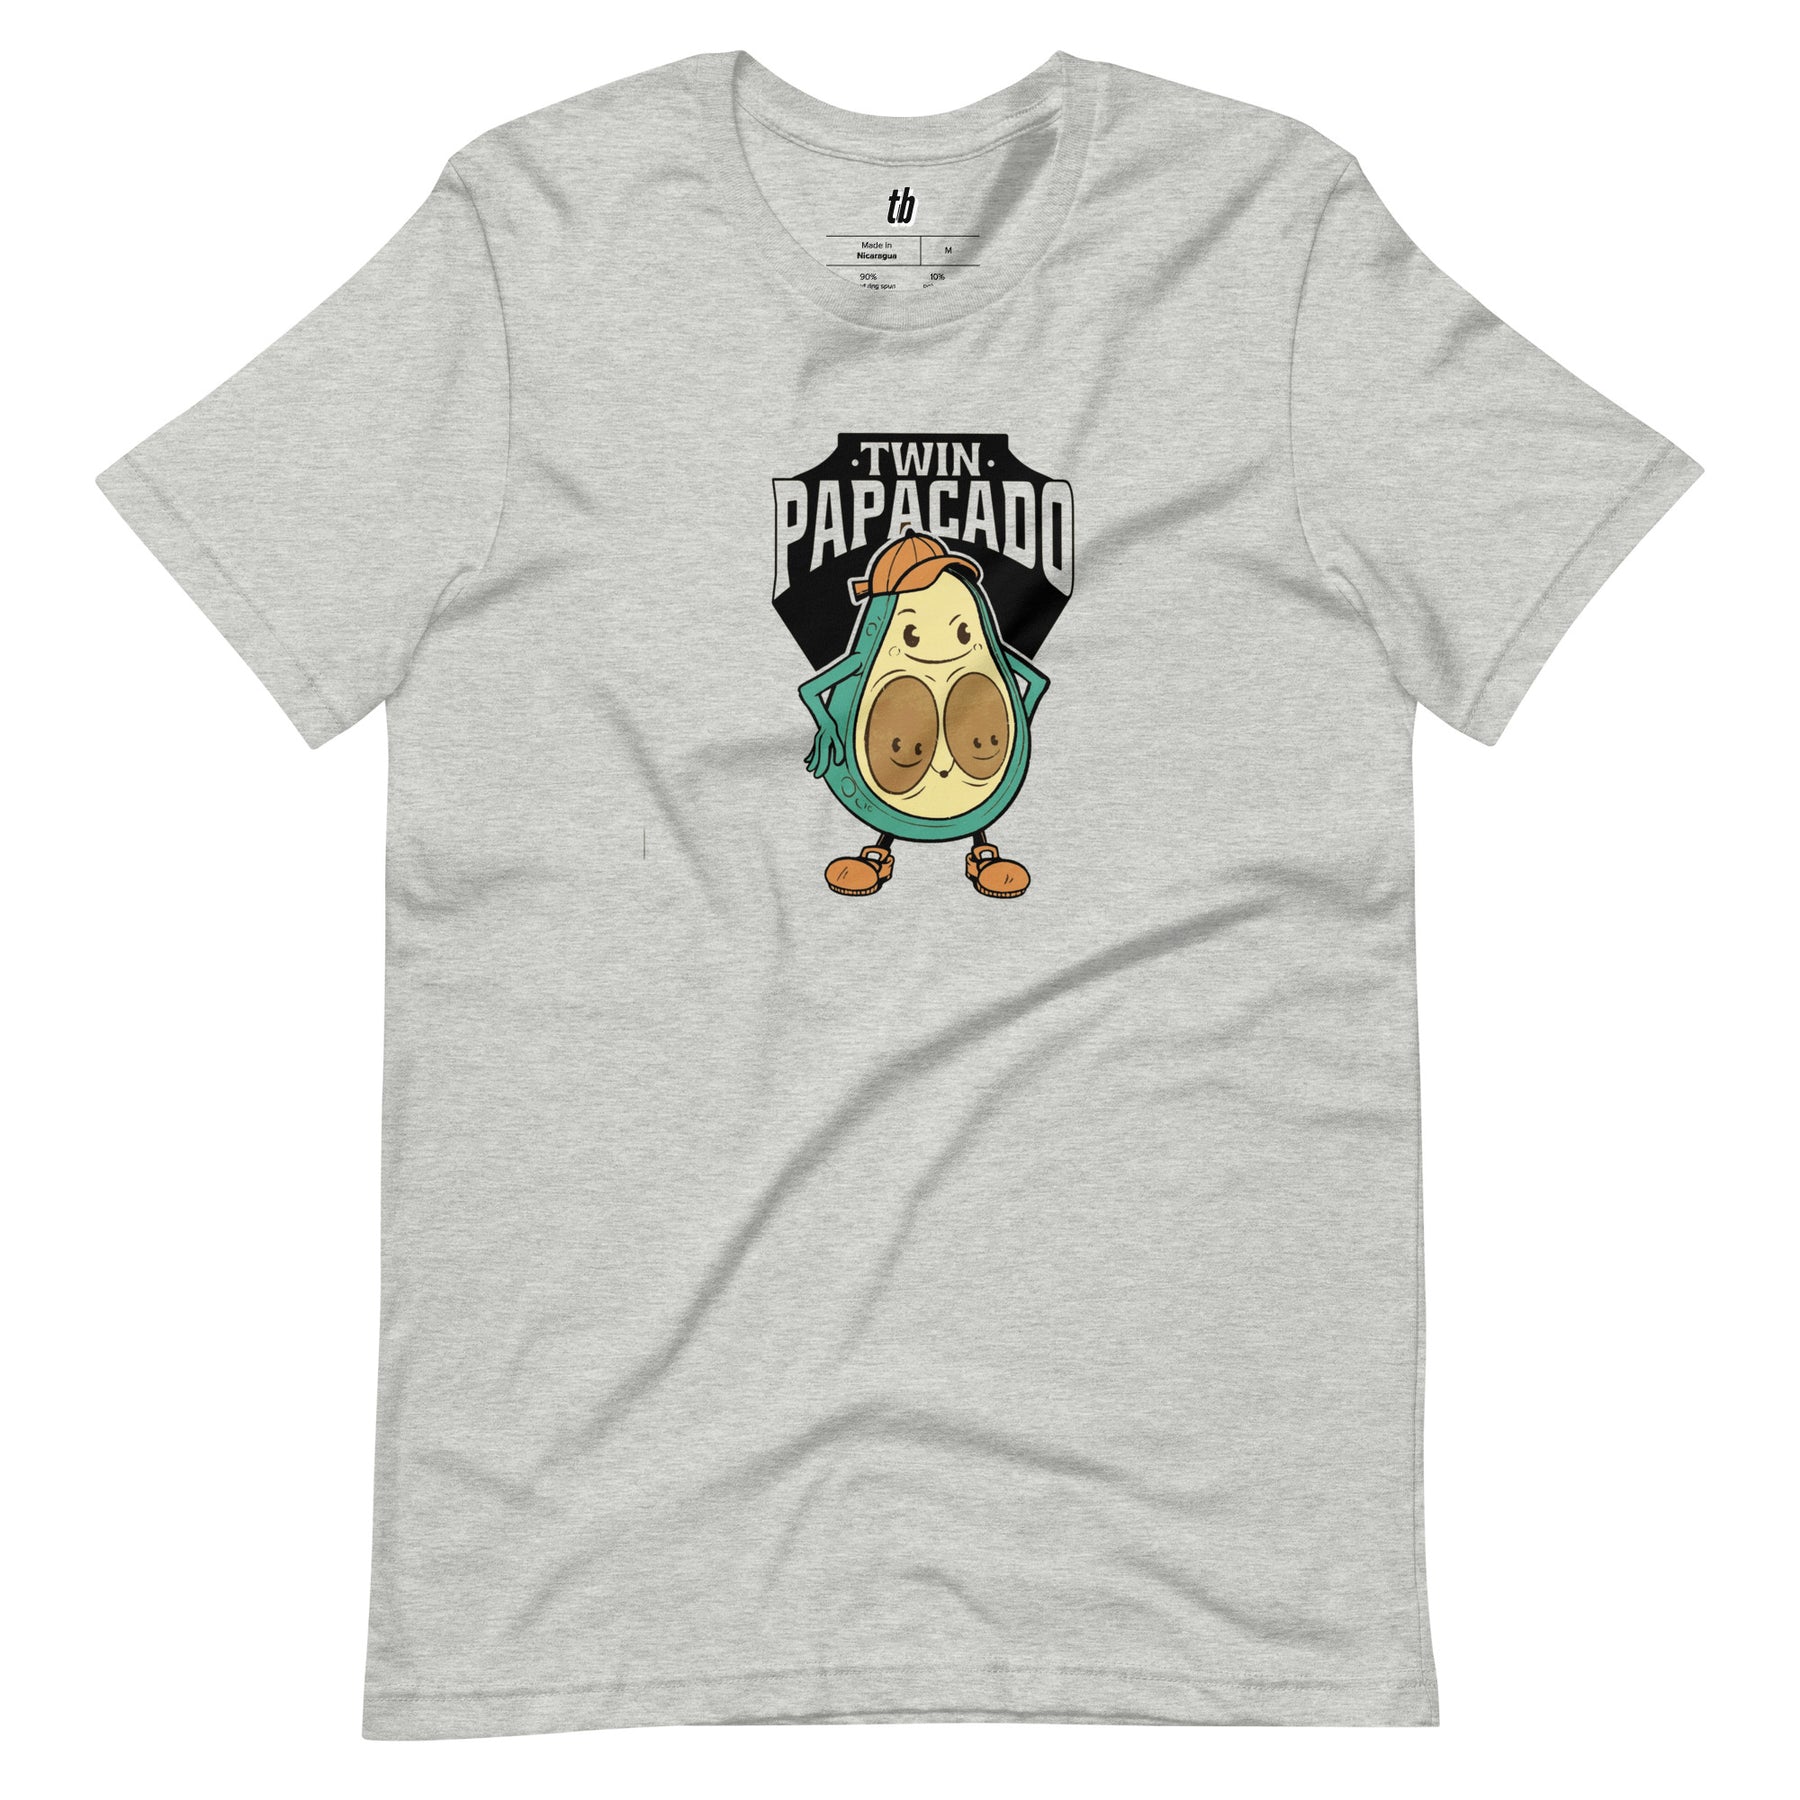 Papacado T-Shirt - Teebop